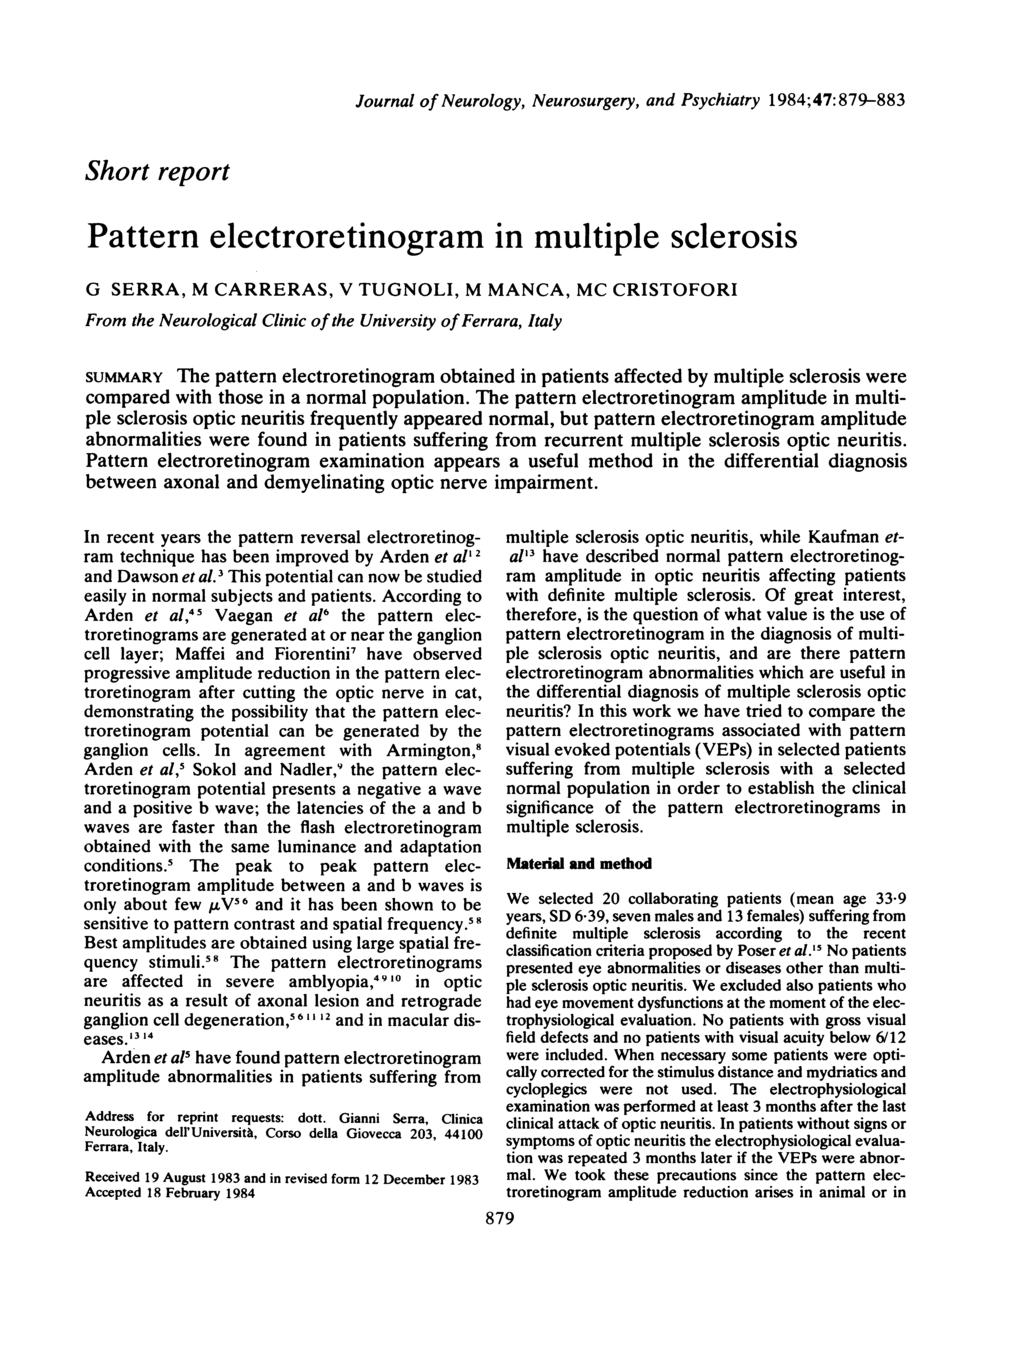 Short report Journal of Neurology, Neurosurgery, and Psychiatry 1984;47:879-883 Pattern electroretinogram in multiple sclerosis G SERRA, M CARRERAS, V TUGNOLI, M MANCA, MC CRISTOFORI From the